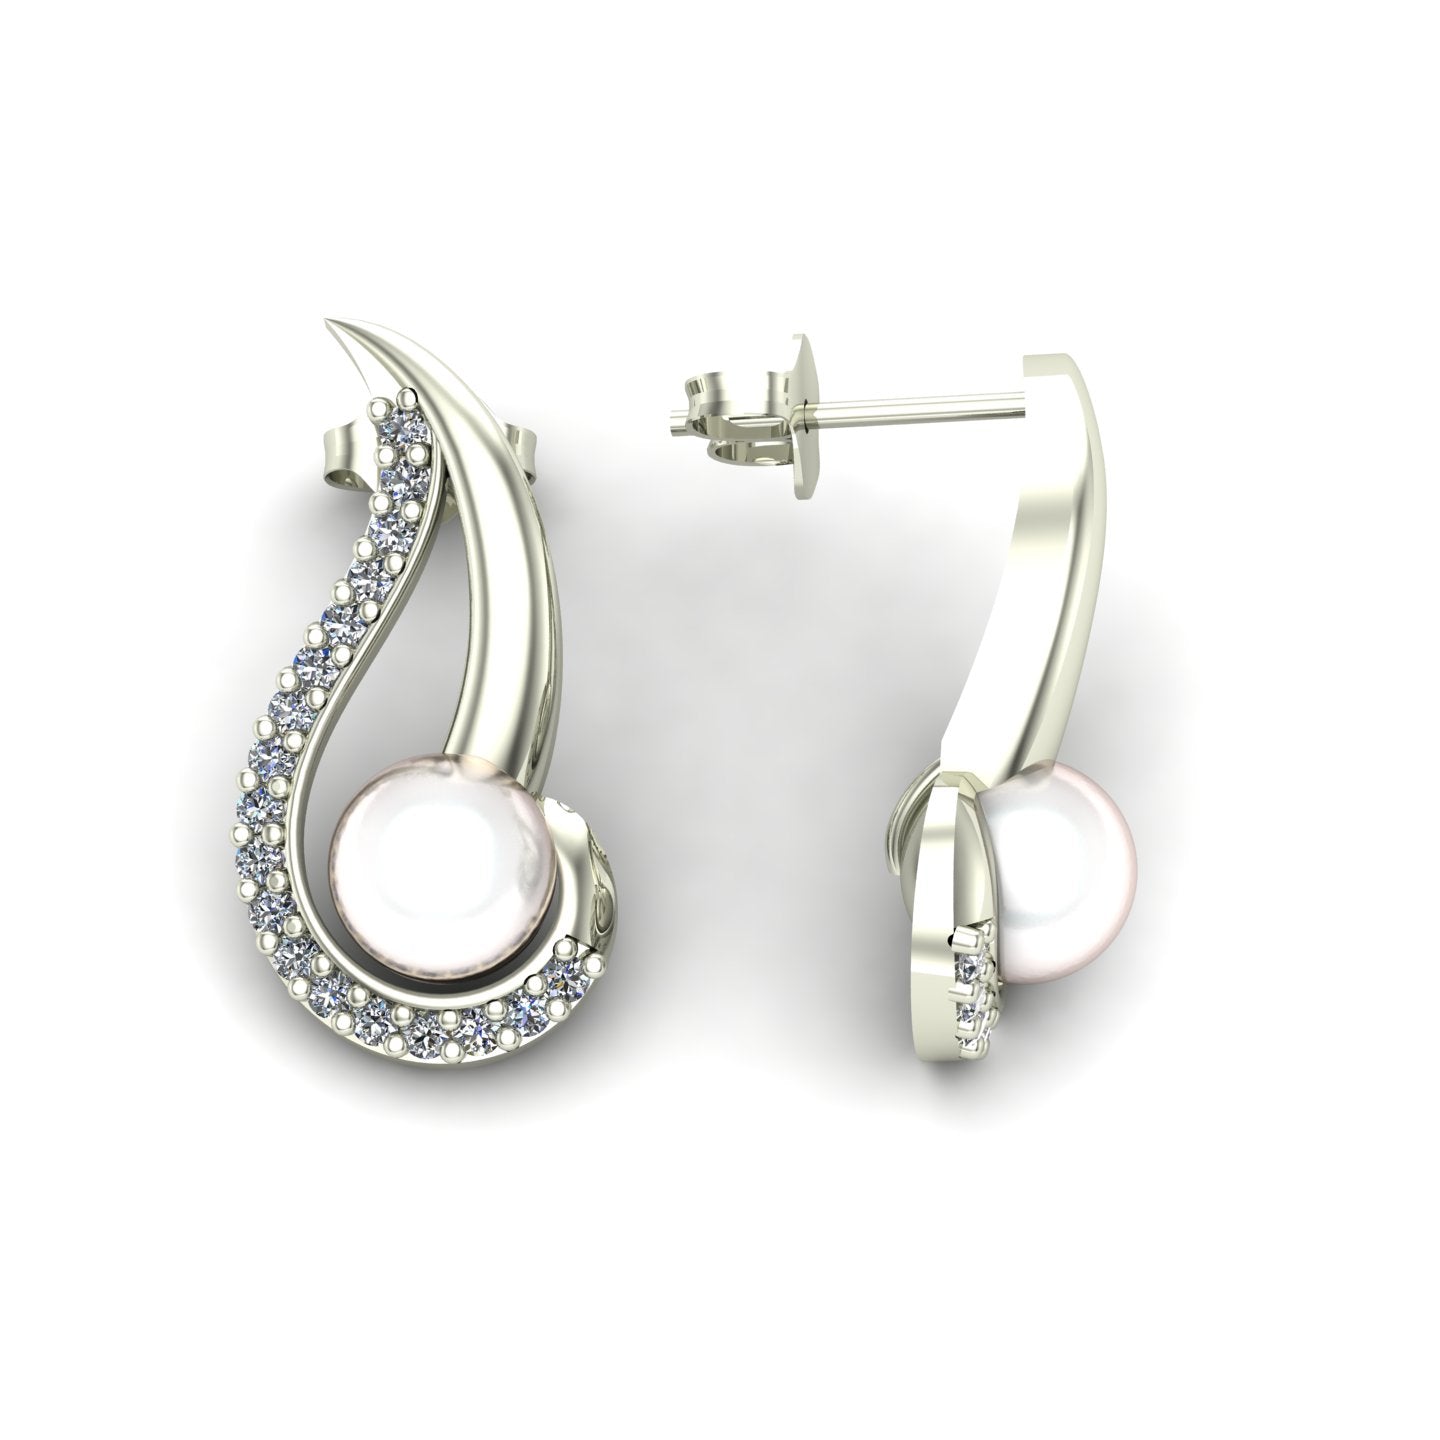 pearl and diamond swirl earrings in 14k white gold - Charles Babb Designs